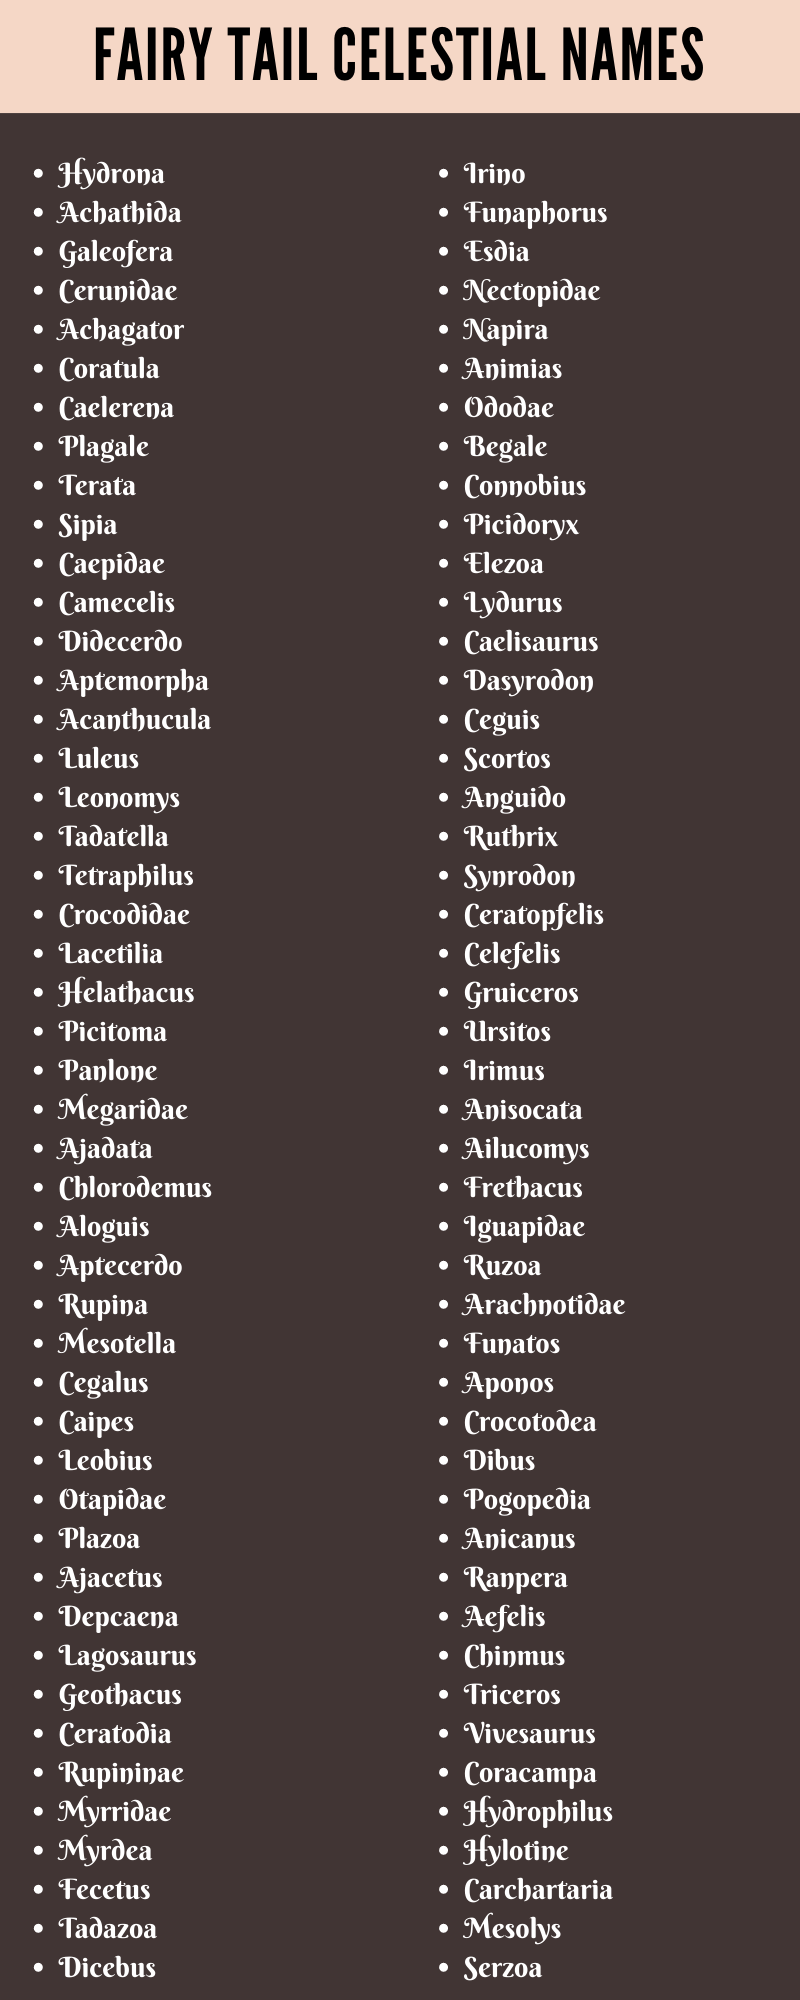 Fairy Tail Celestial Names